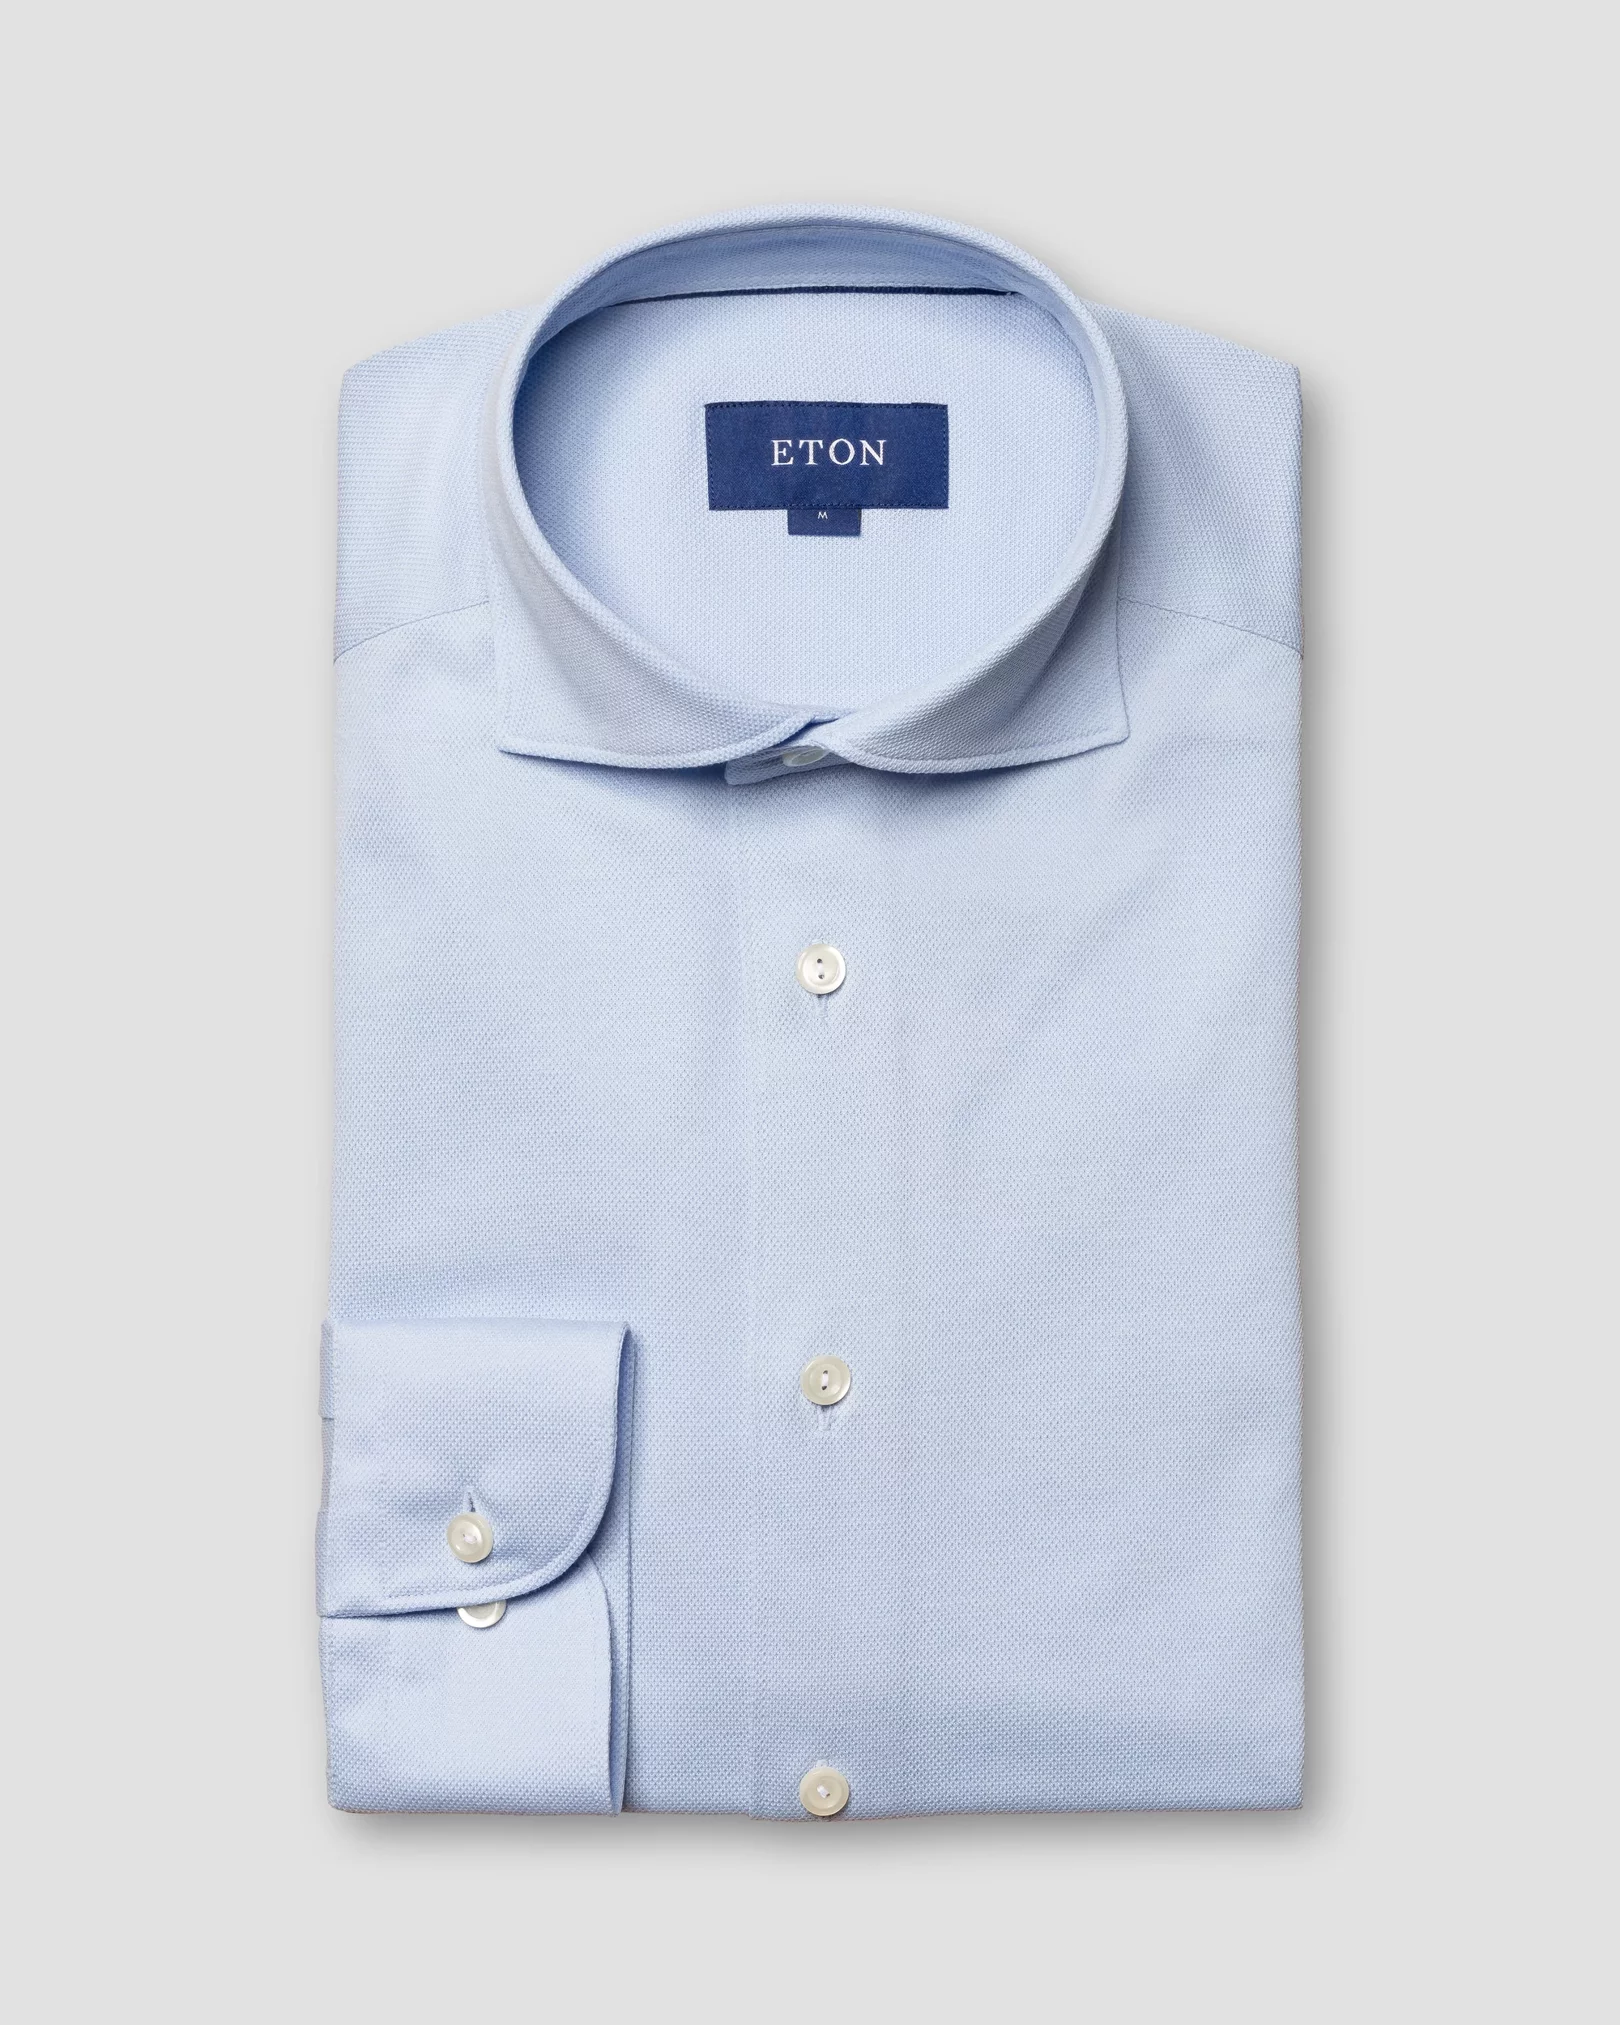 Eton - light blue pique shirt